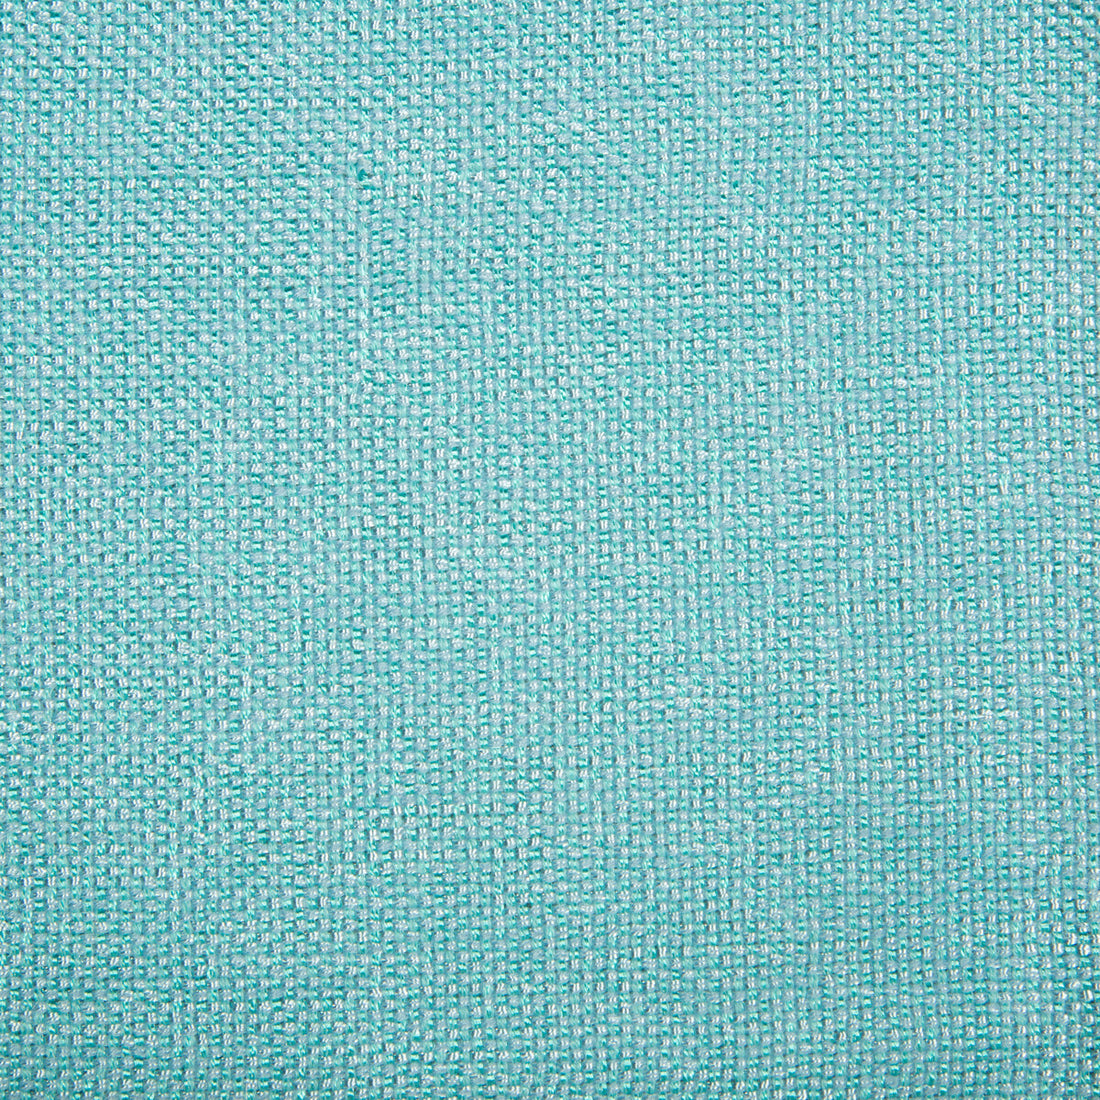 Kravet Smart fabric in 34939-115 color - pattern 34939.115.0 - by Kravet Smart